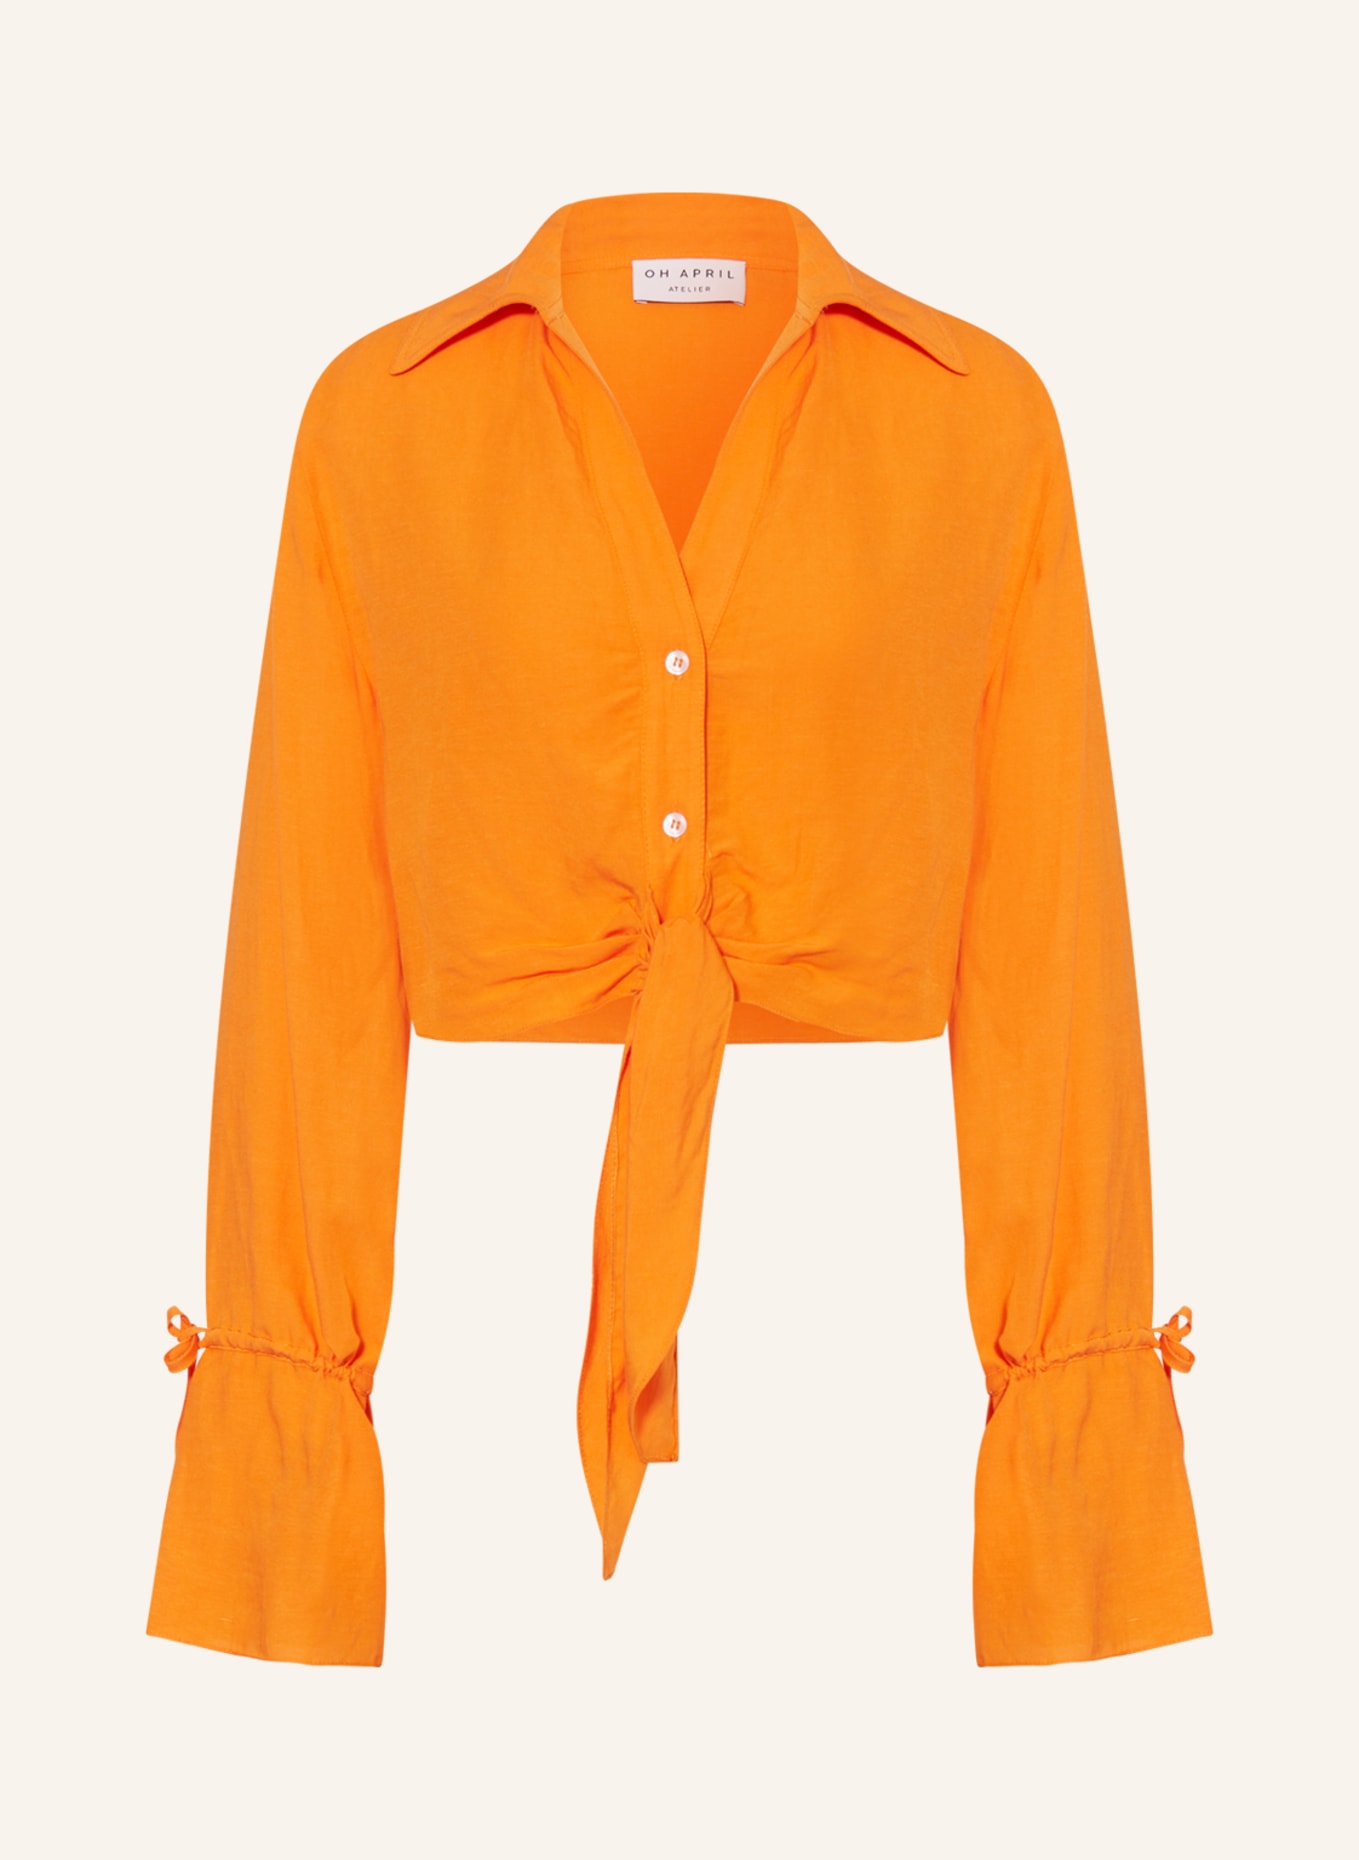 OH APRIL Cropped-Bluse SOLÈNE aus Seide, Farbe: ORANGE (Bild 1)